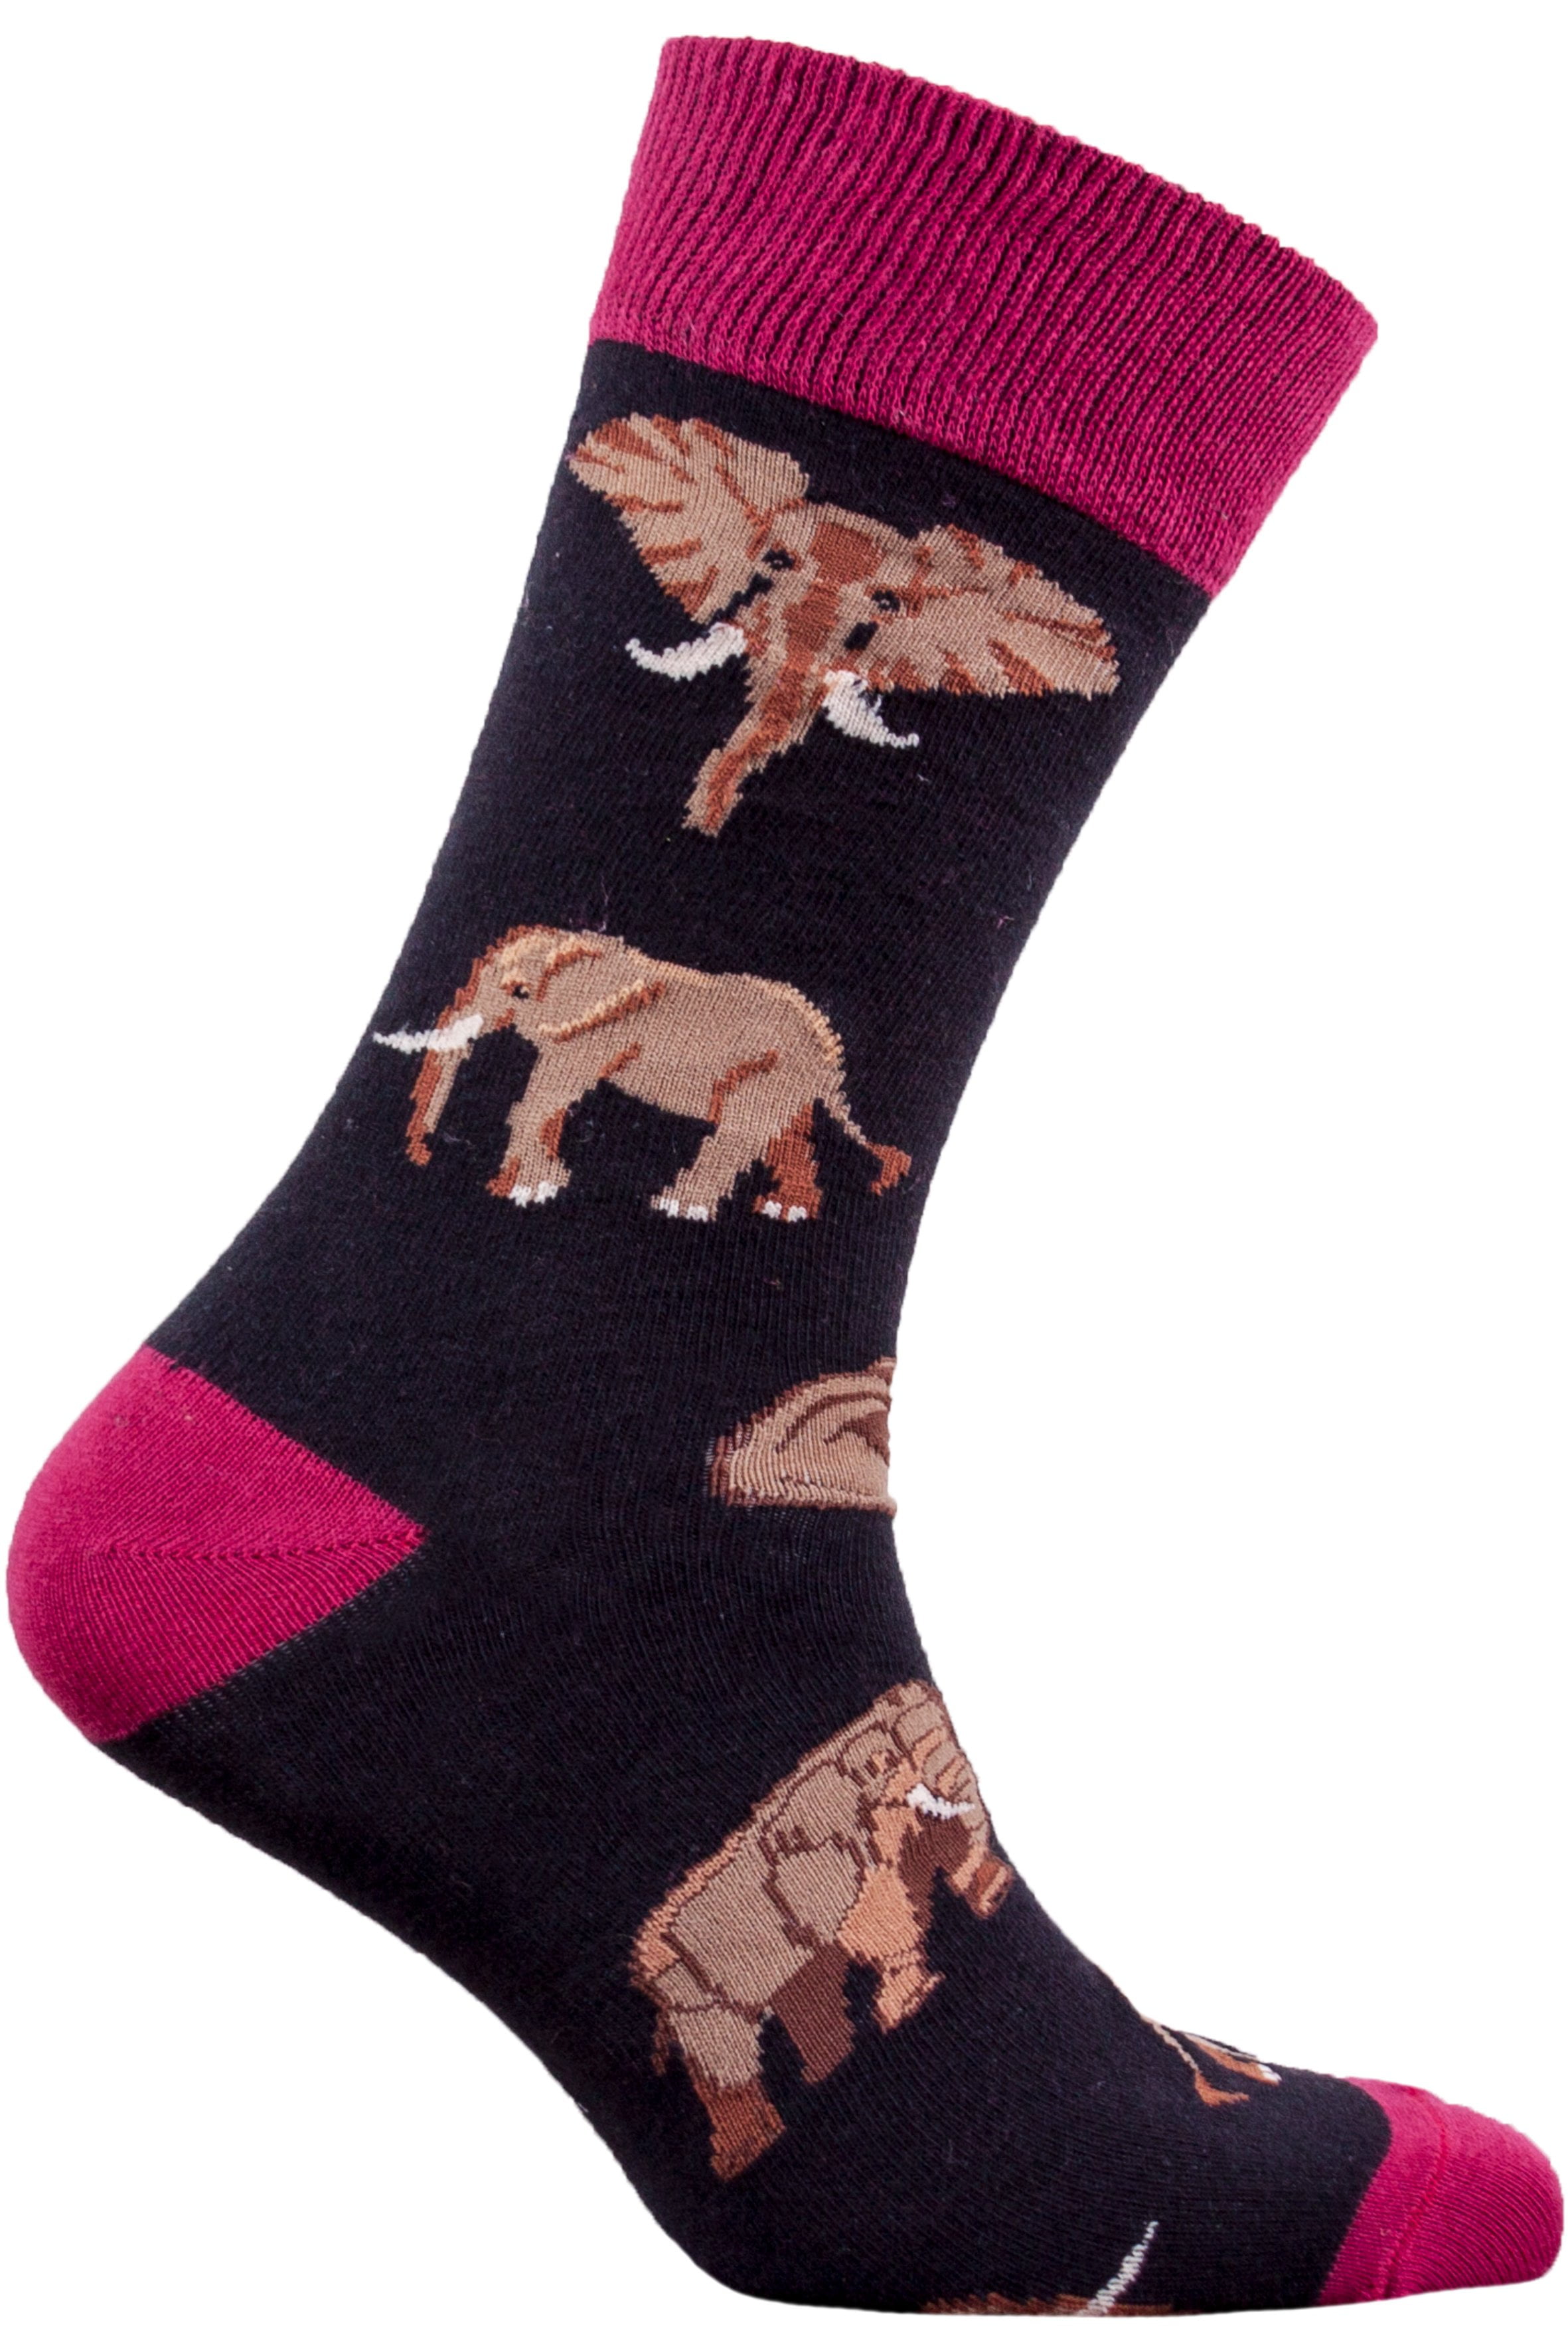 Rainbow Elephant Compression Socks For Women Casual Fashion Crew Socks